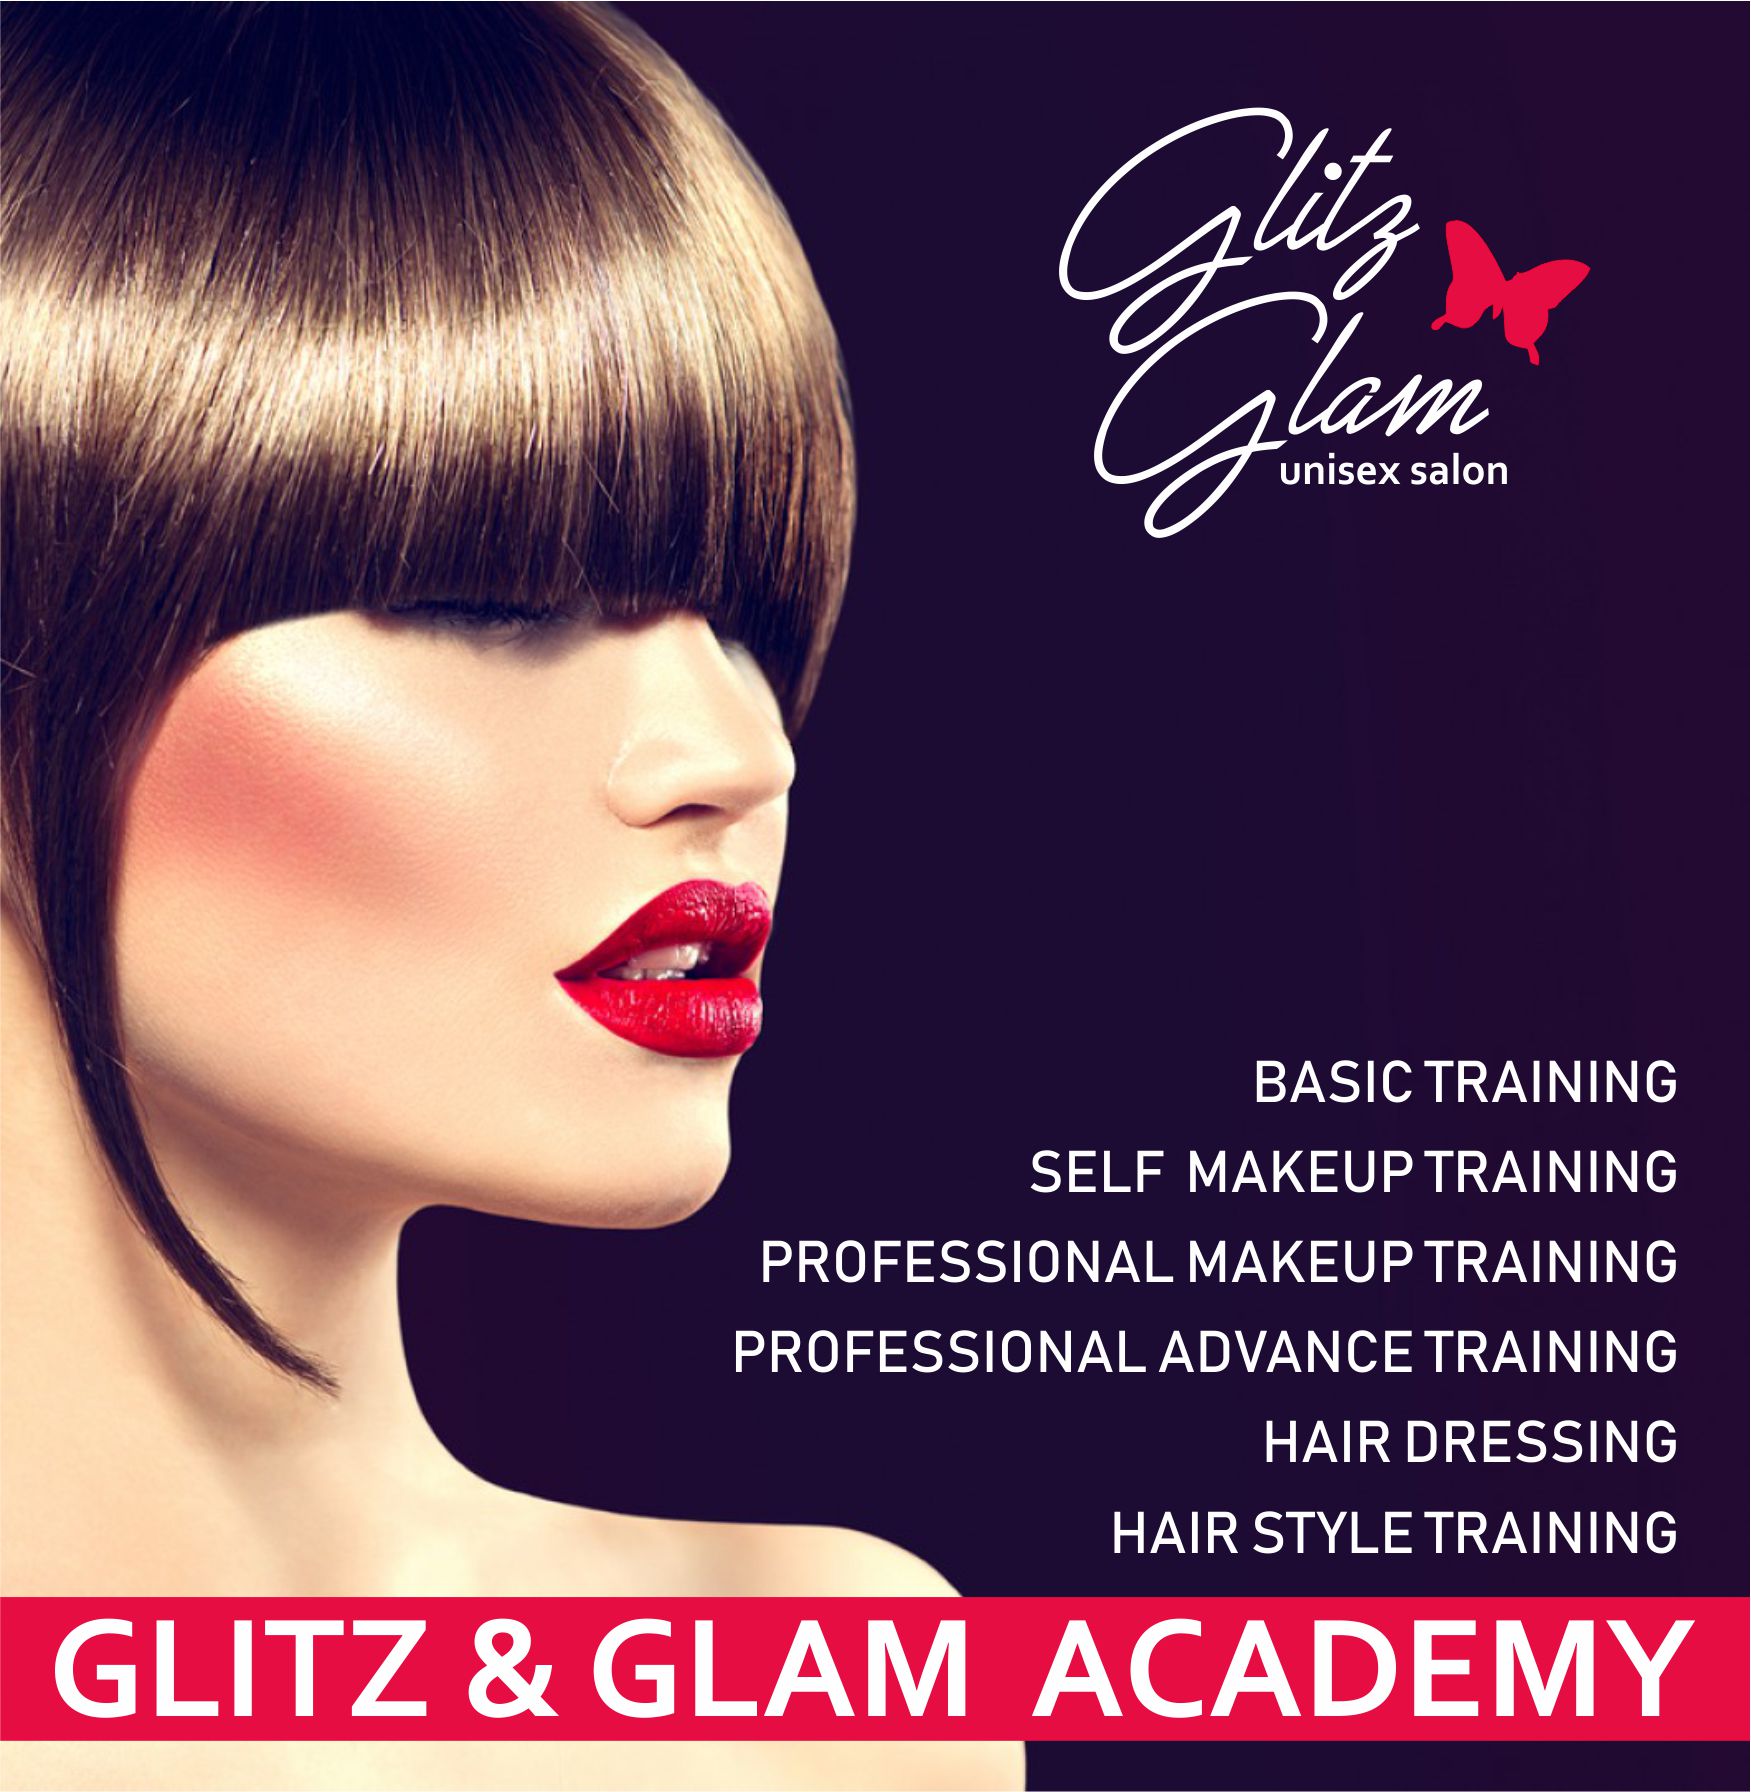 Academy – Glitz & Glam